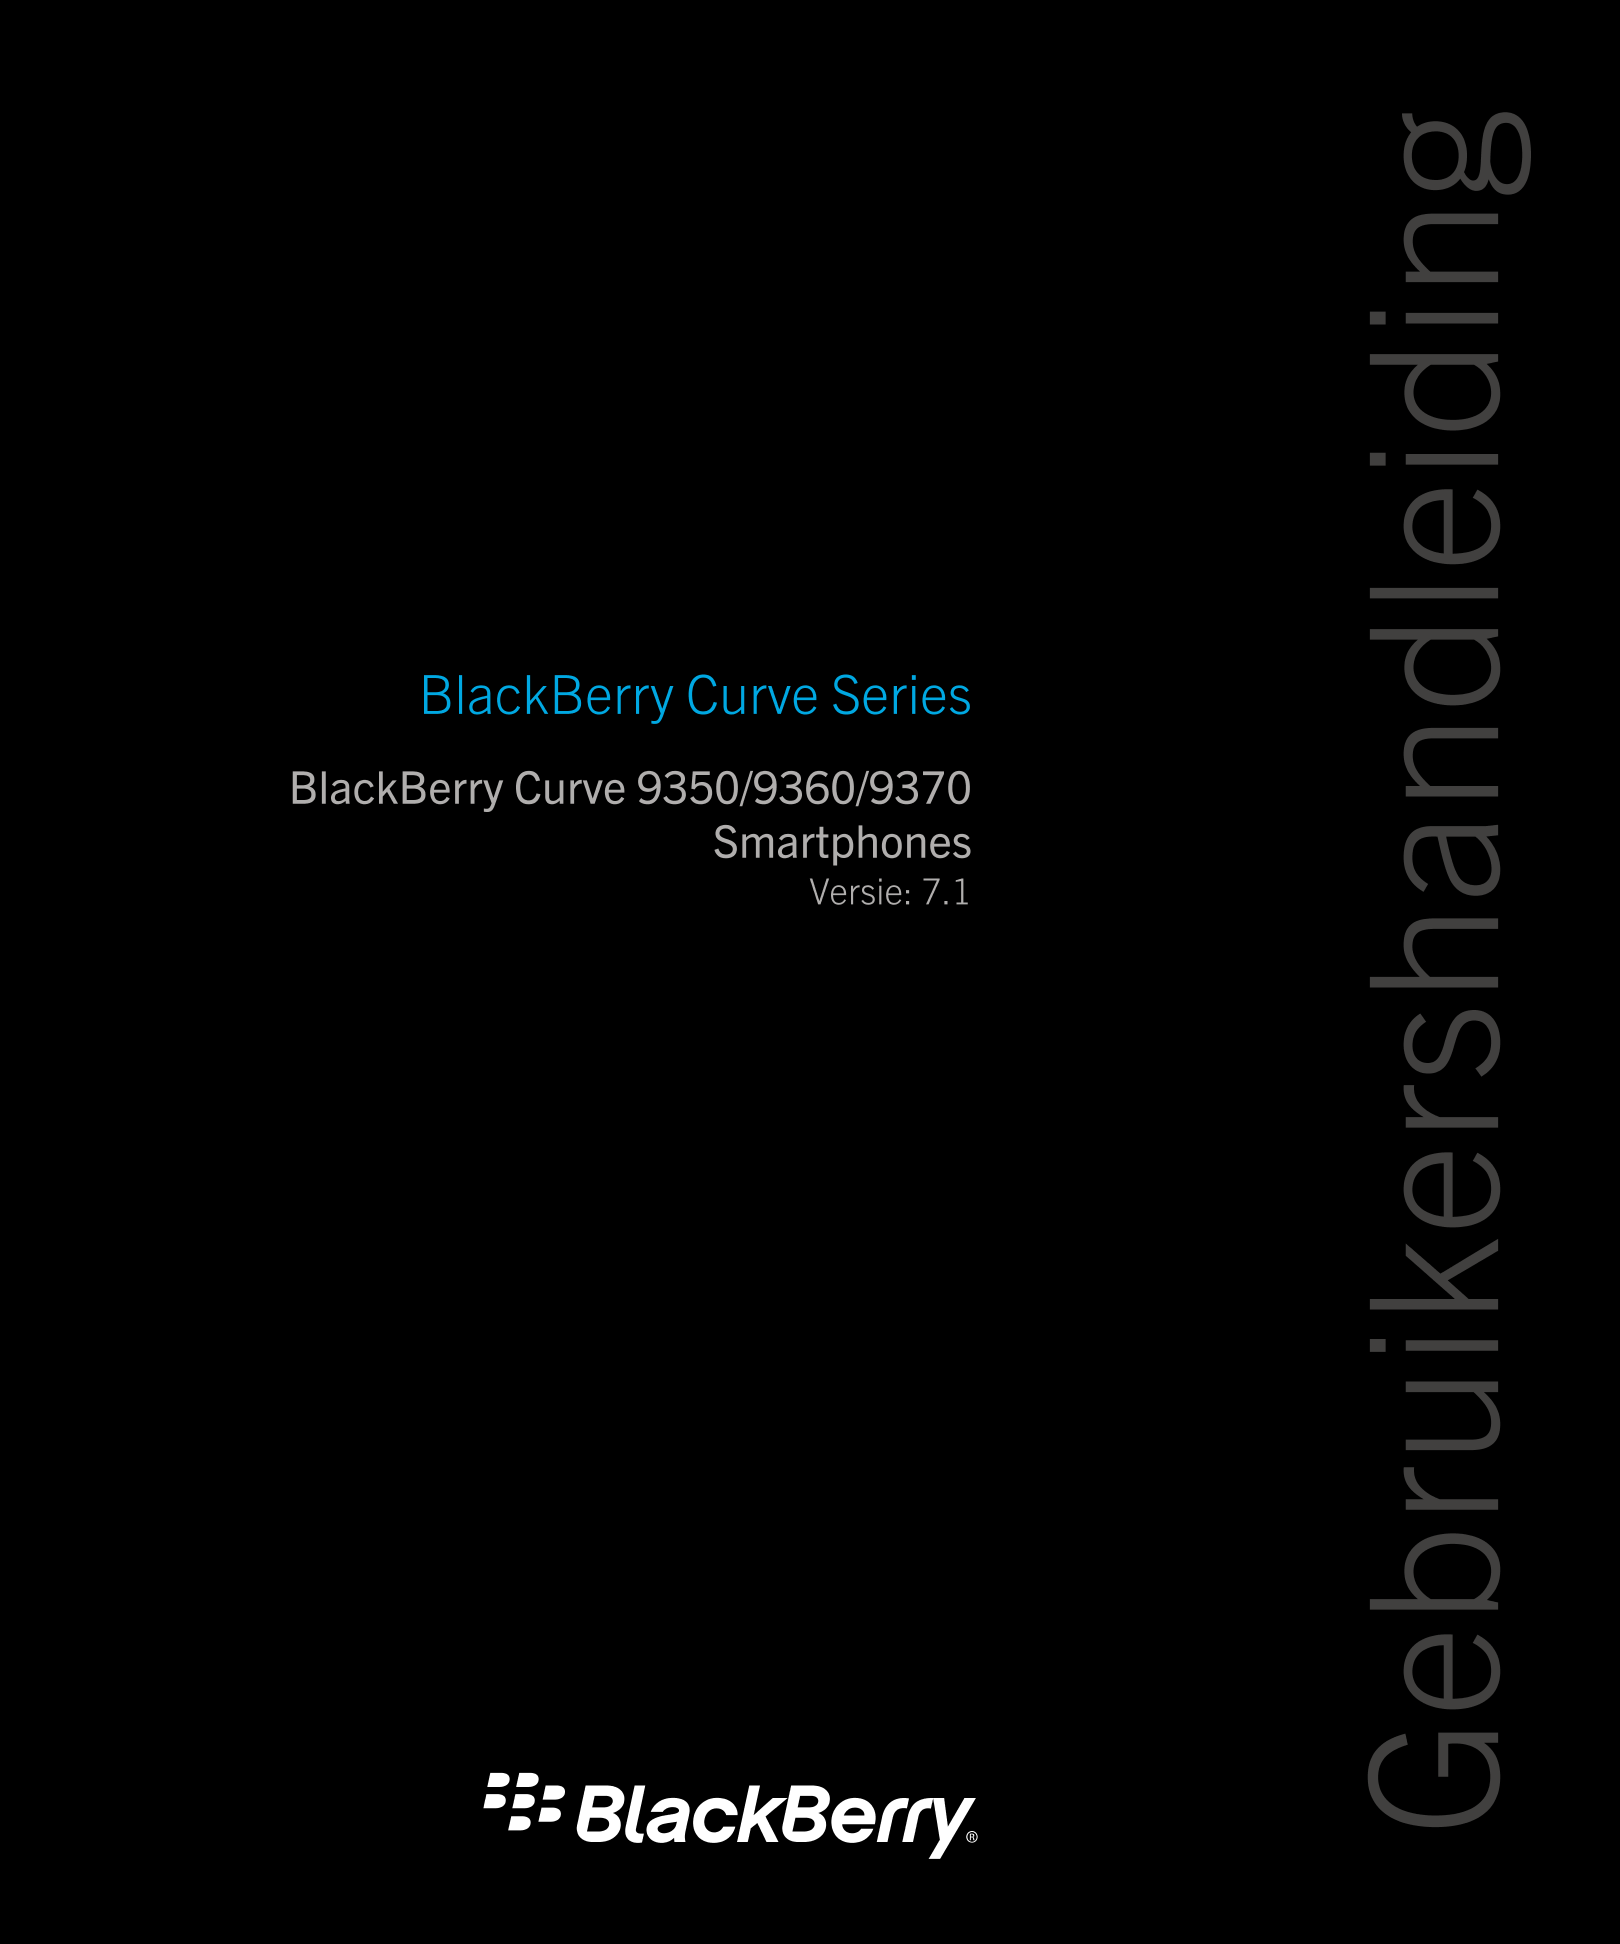 Gebruikershandleiding
BlackBerry Curve Series
BlackBerry Curve 9350/9360/9370 
Smartphones
Versie: 7.1